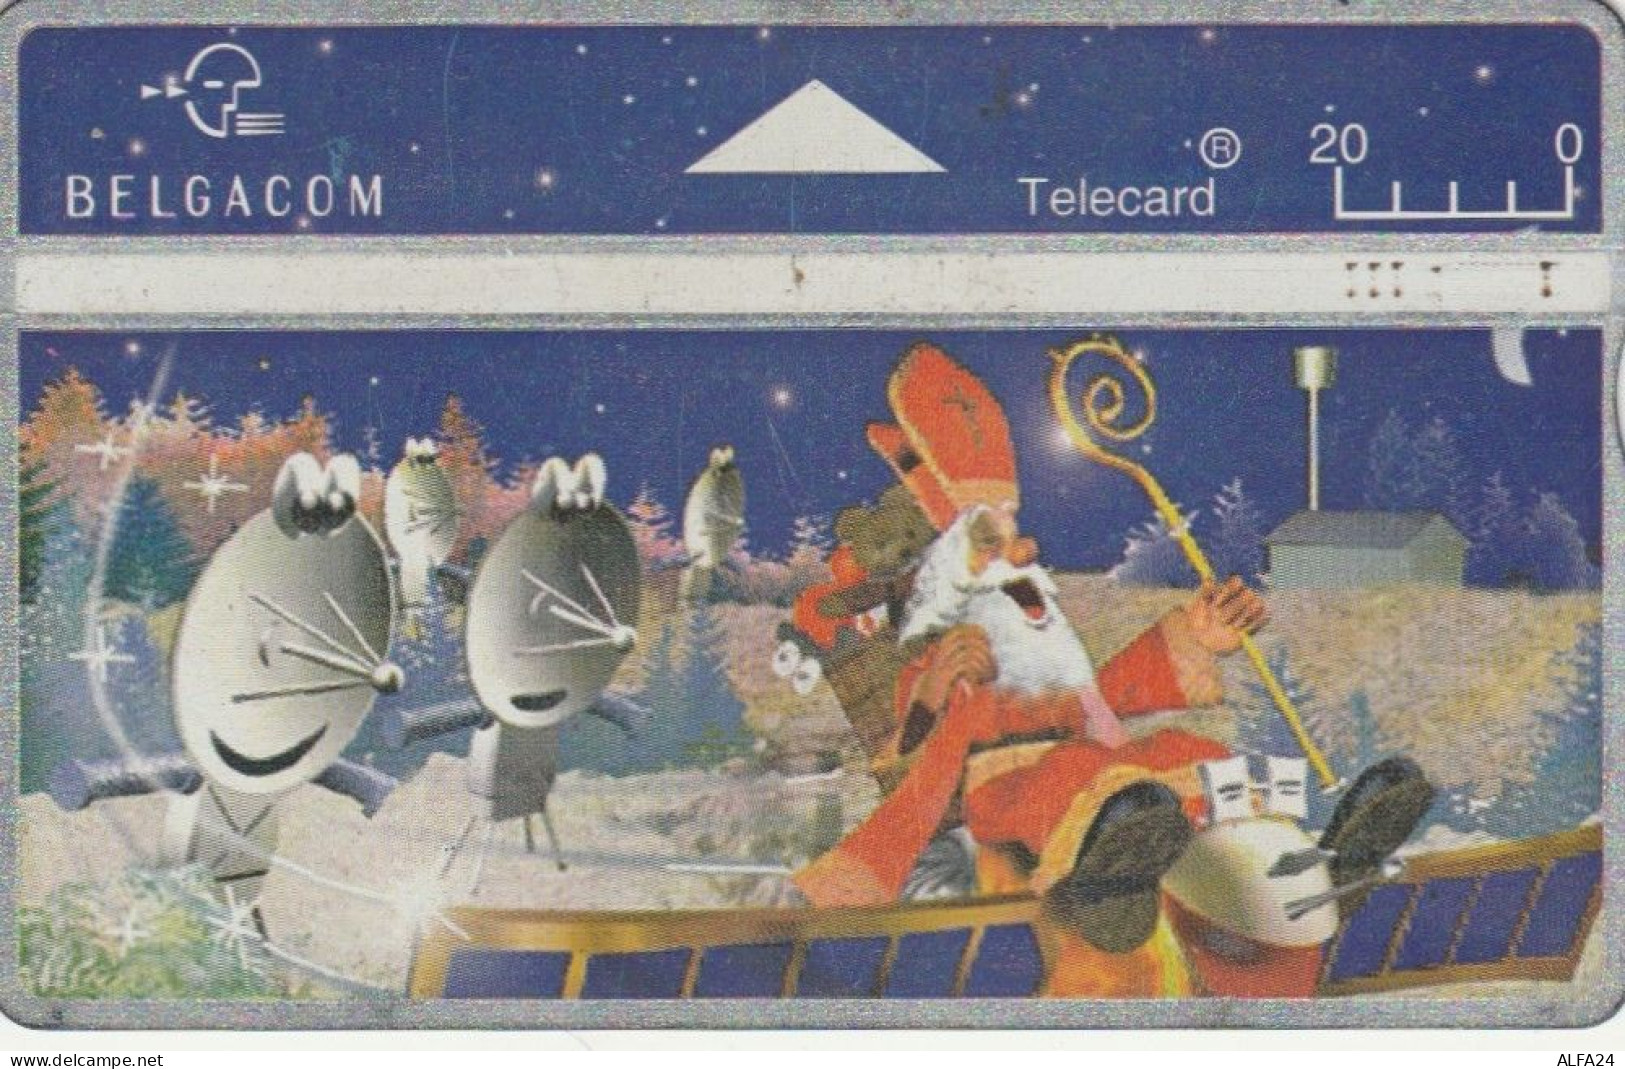 PHONE CARD BELGIO LANDIS (CK6020 - Senza Chip